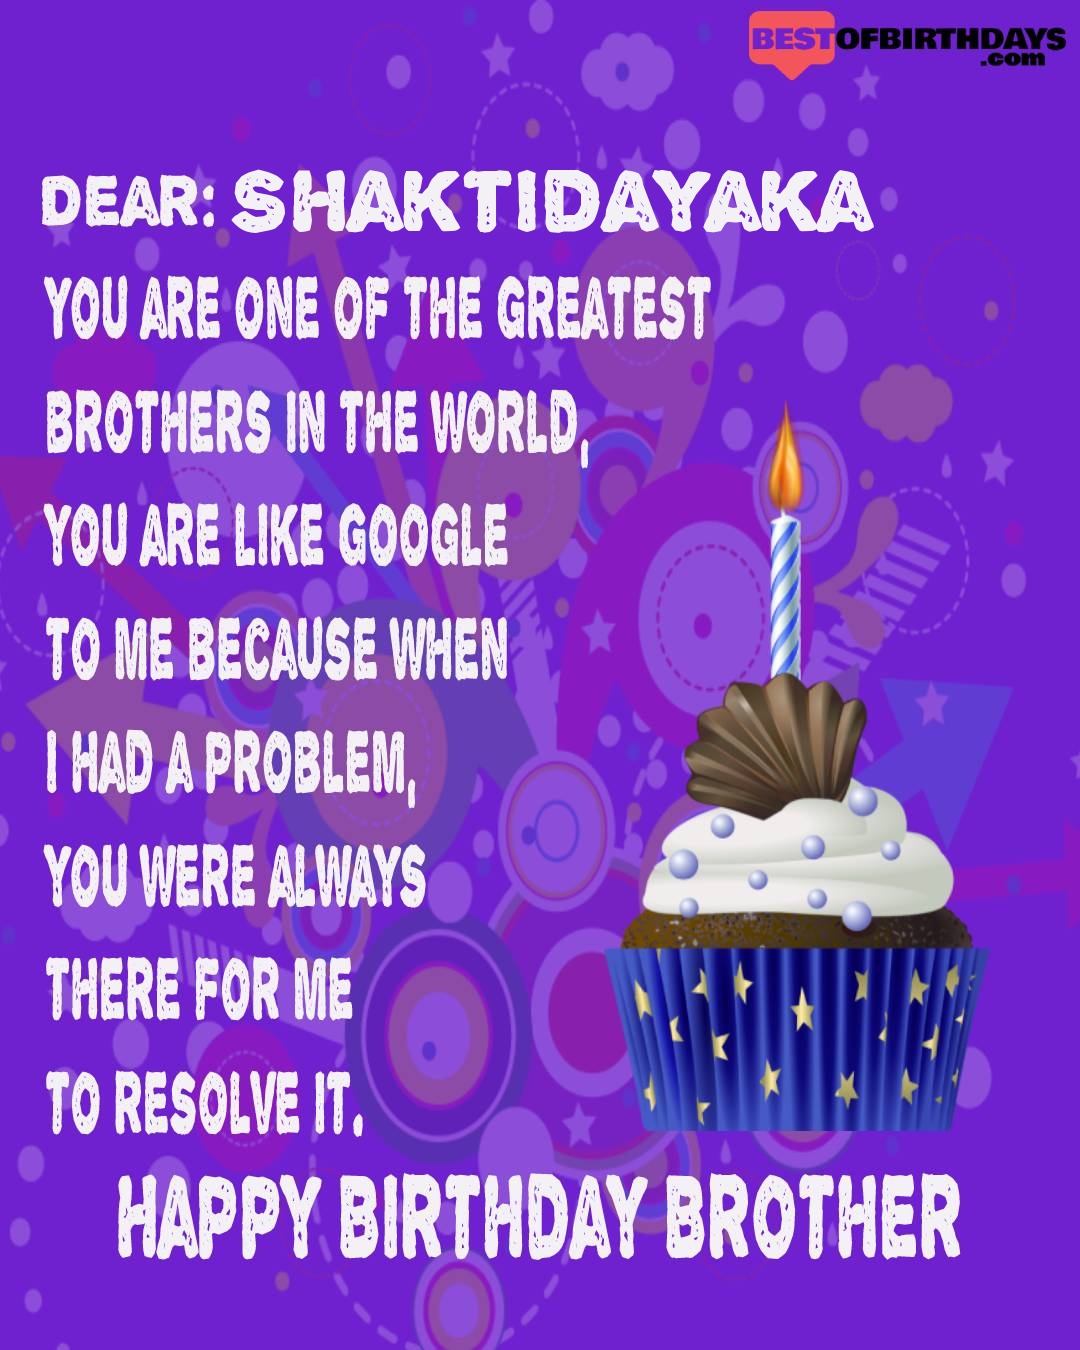 Happy birthday shaktidayaka bhai brother bro